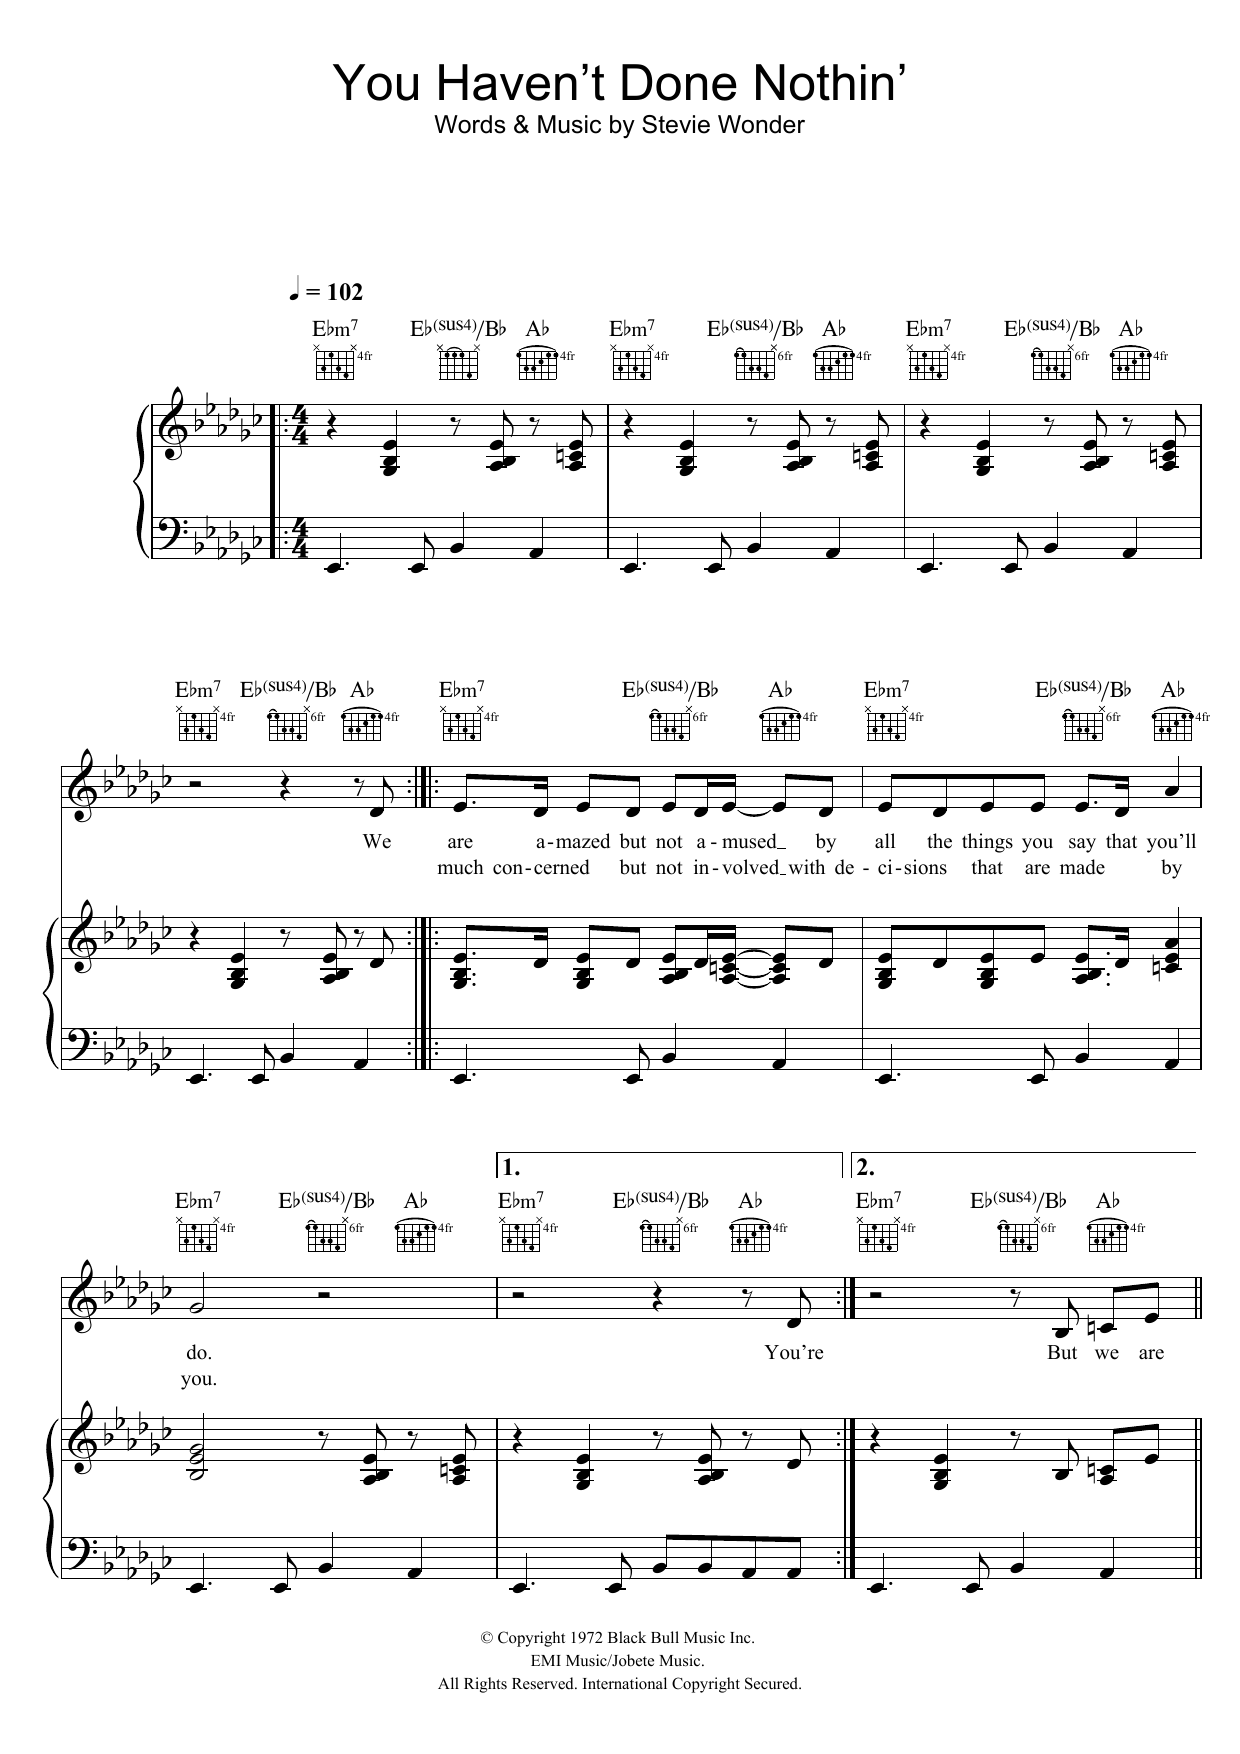 Stevie Wonder You Haven't Done Nothin' Sheet Music Notes & Chords for Guitar Chords/Lyrics - Download or Print PDF